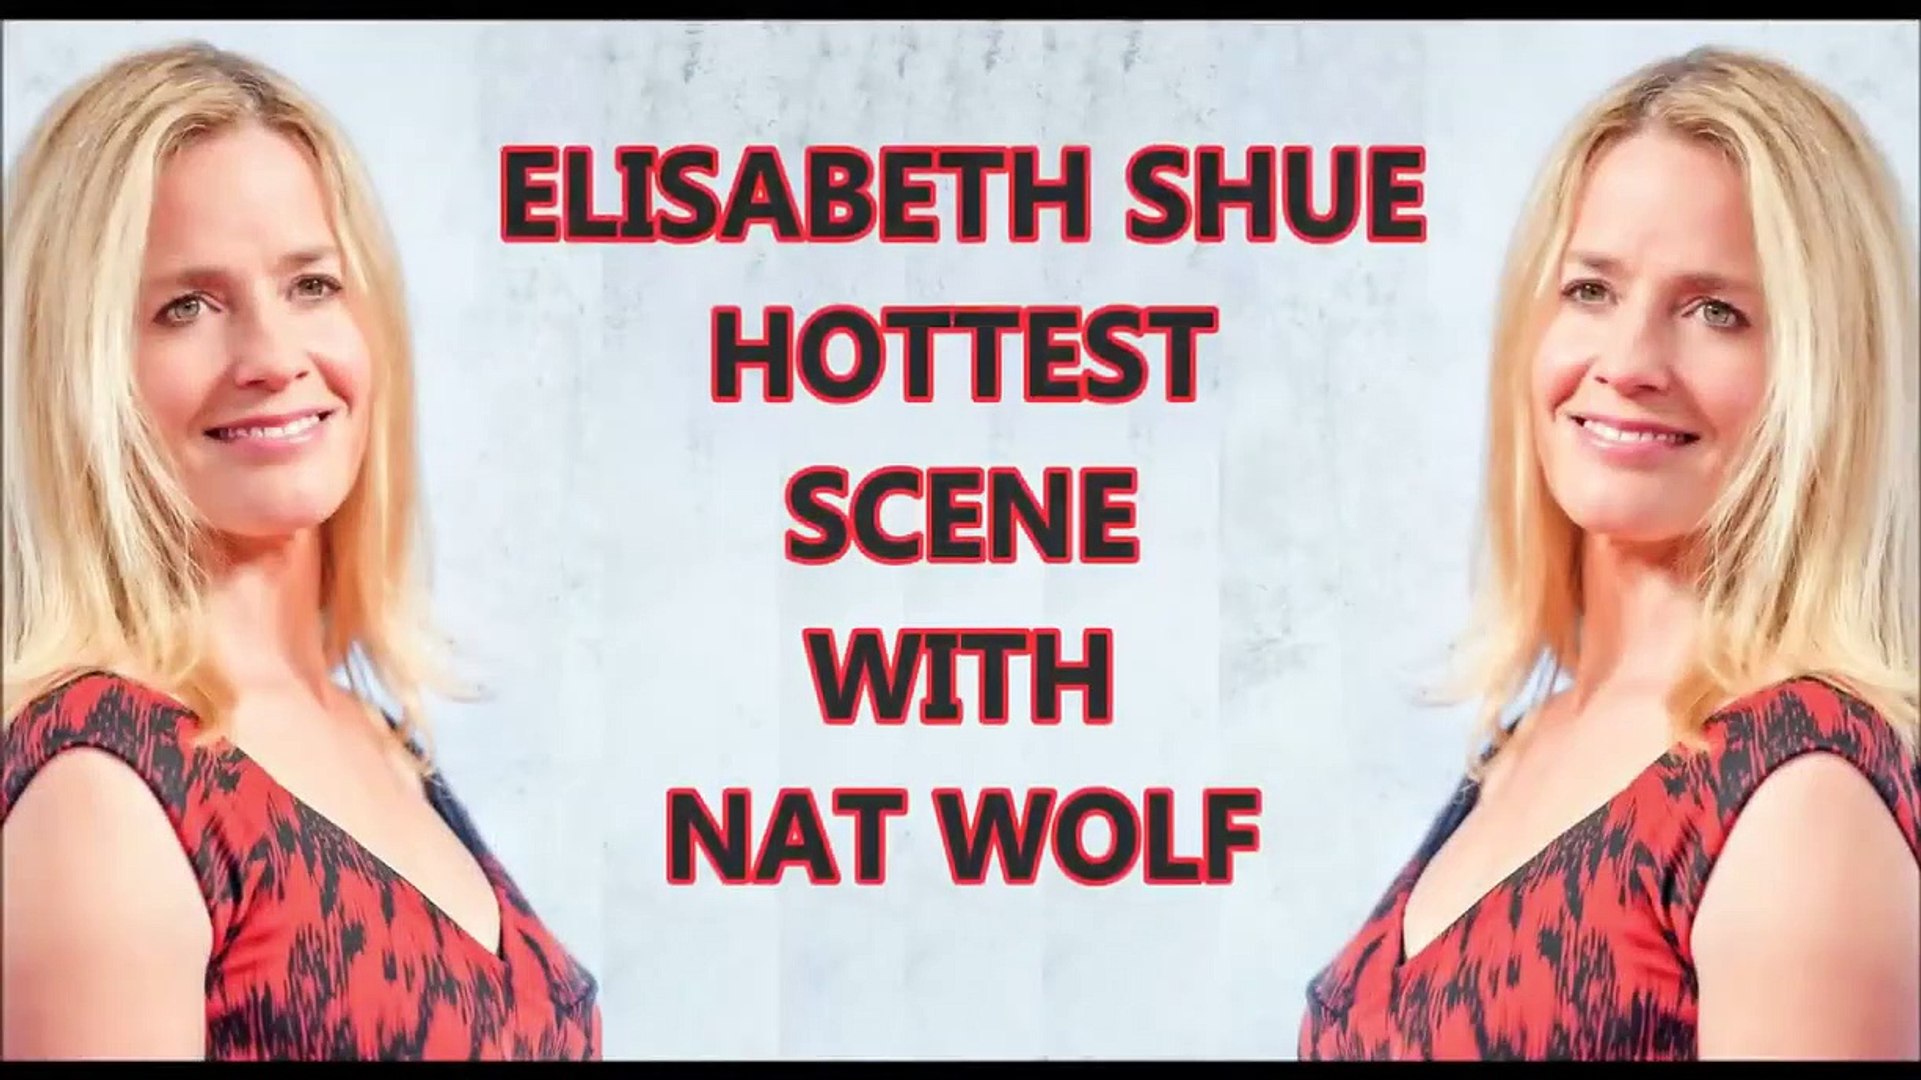 Elisabeth shue hot pics